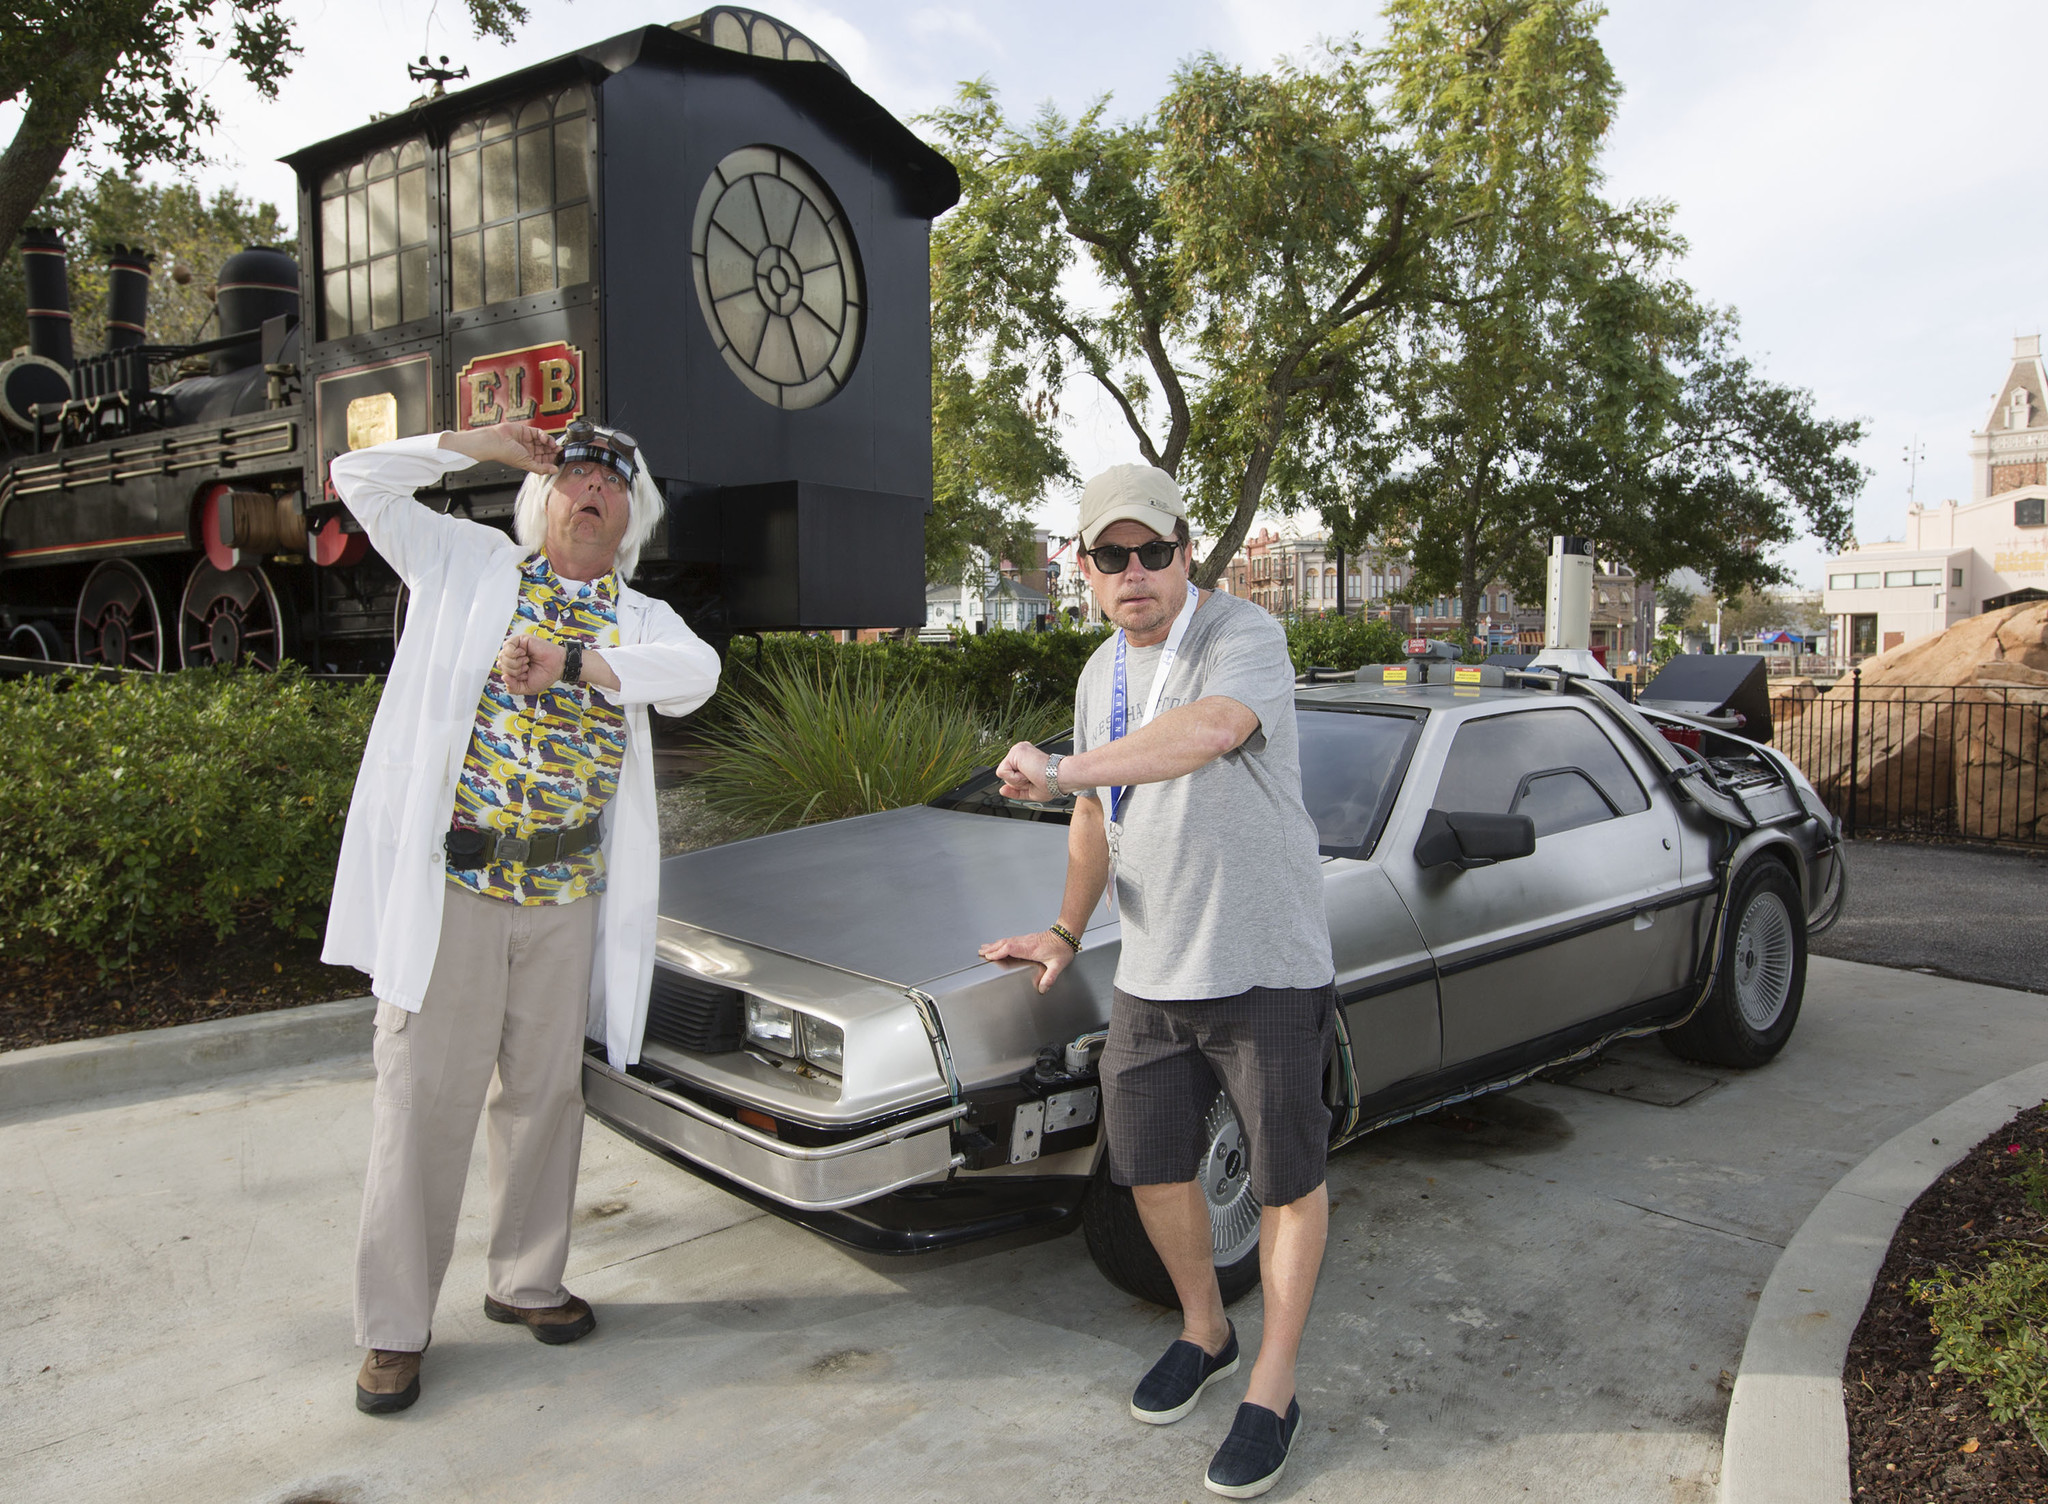 Picture it: Michael J. Fox at Universal Studios - Orlando Sentinel2048 x 1504